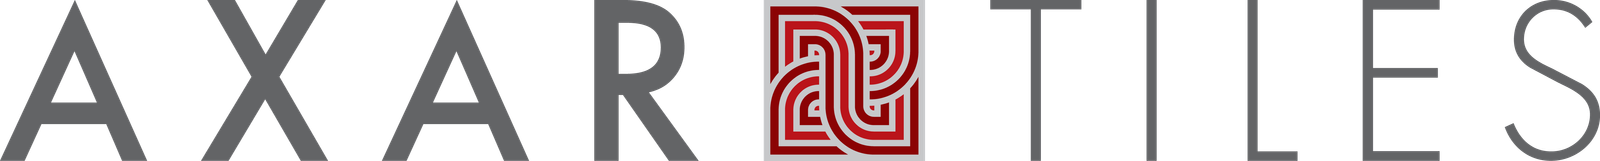 Axar Tiles Logo Horizontal